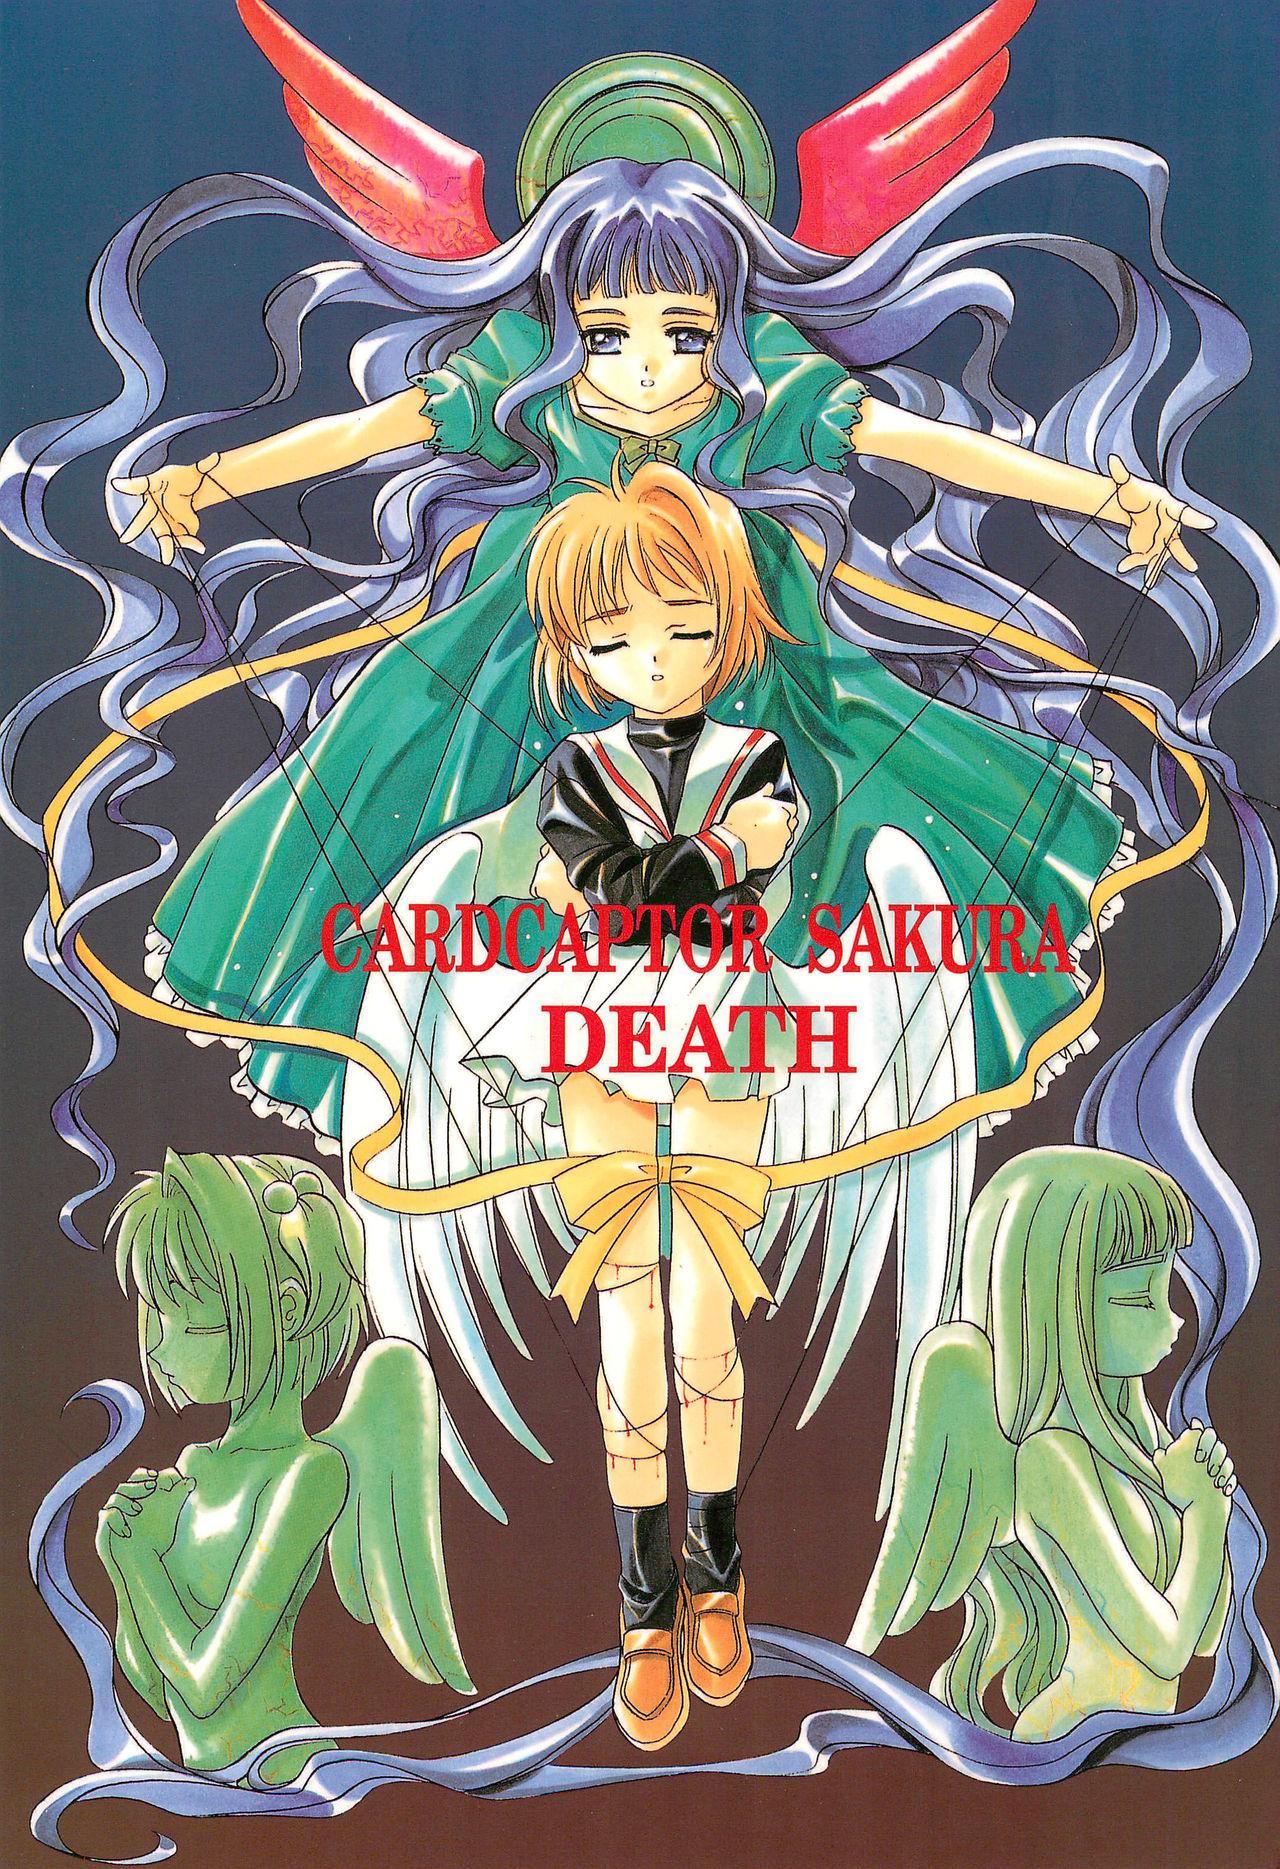 Amazing CARDCAPTOR SAKURA DEATH - Cardcaptor sakura Horny Slut - Picture 1